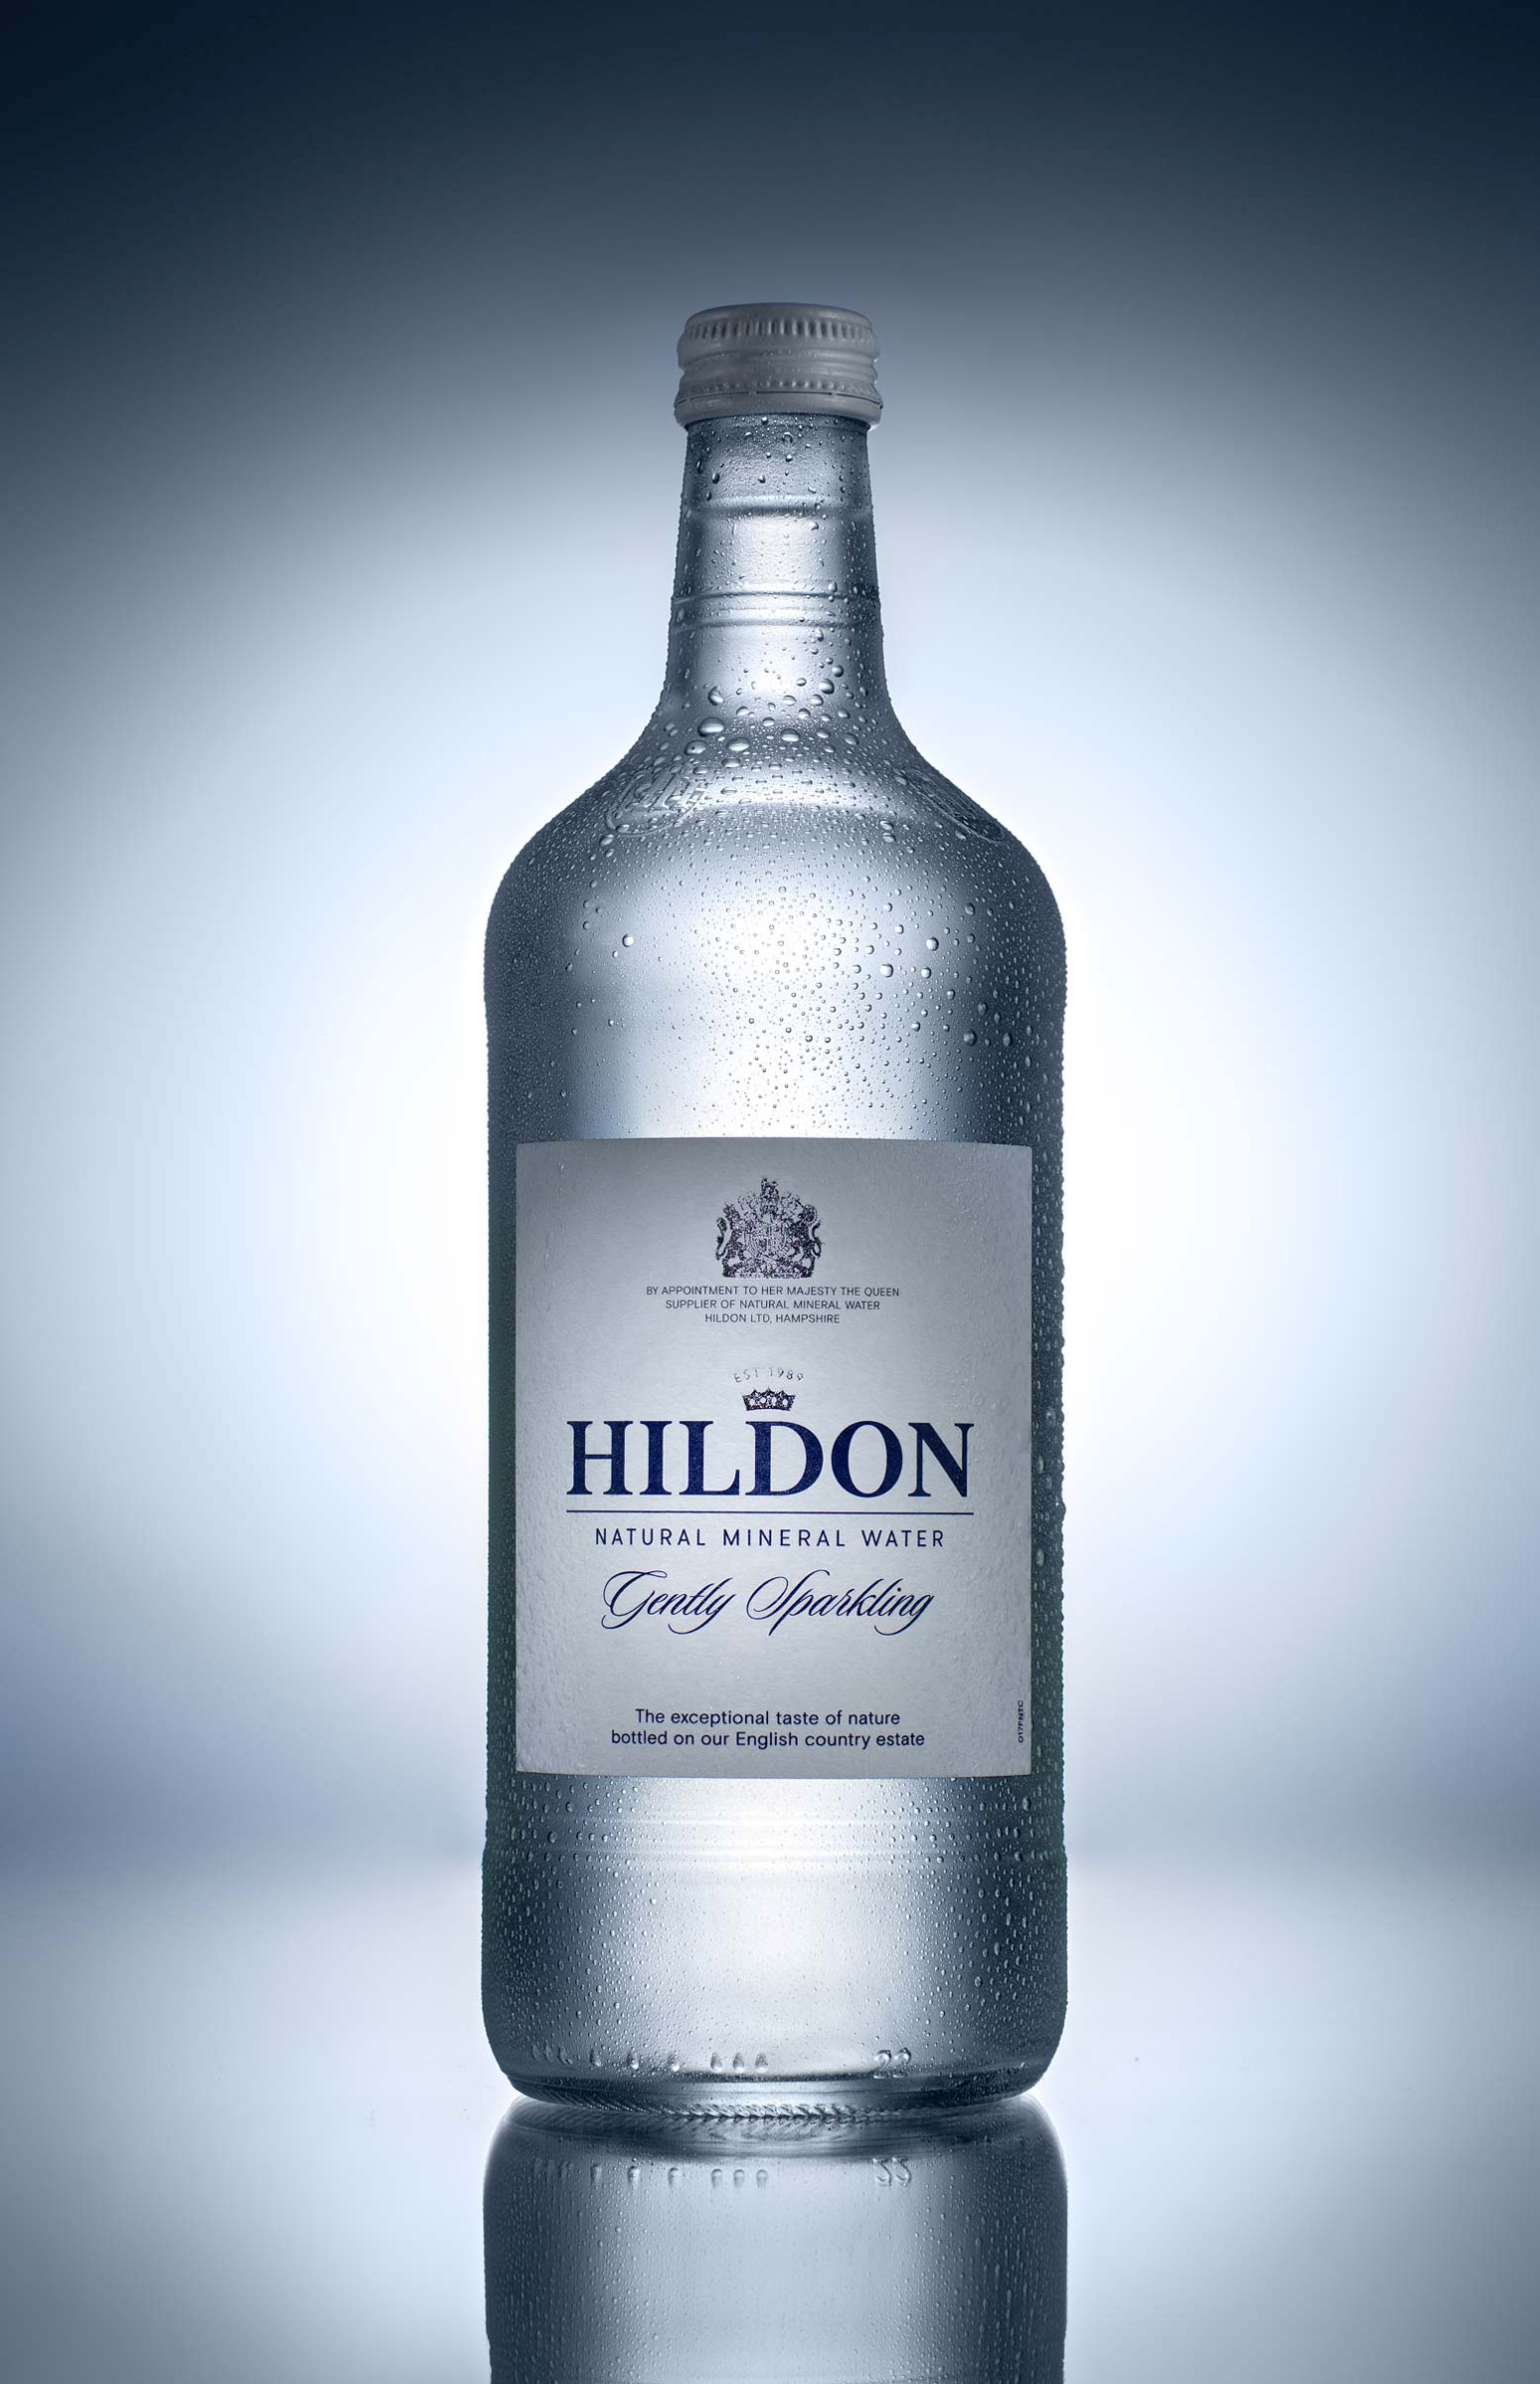 Hildon bottle photographed by Karl Taylor using speedlights